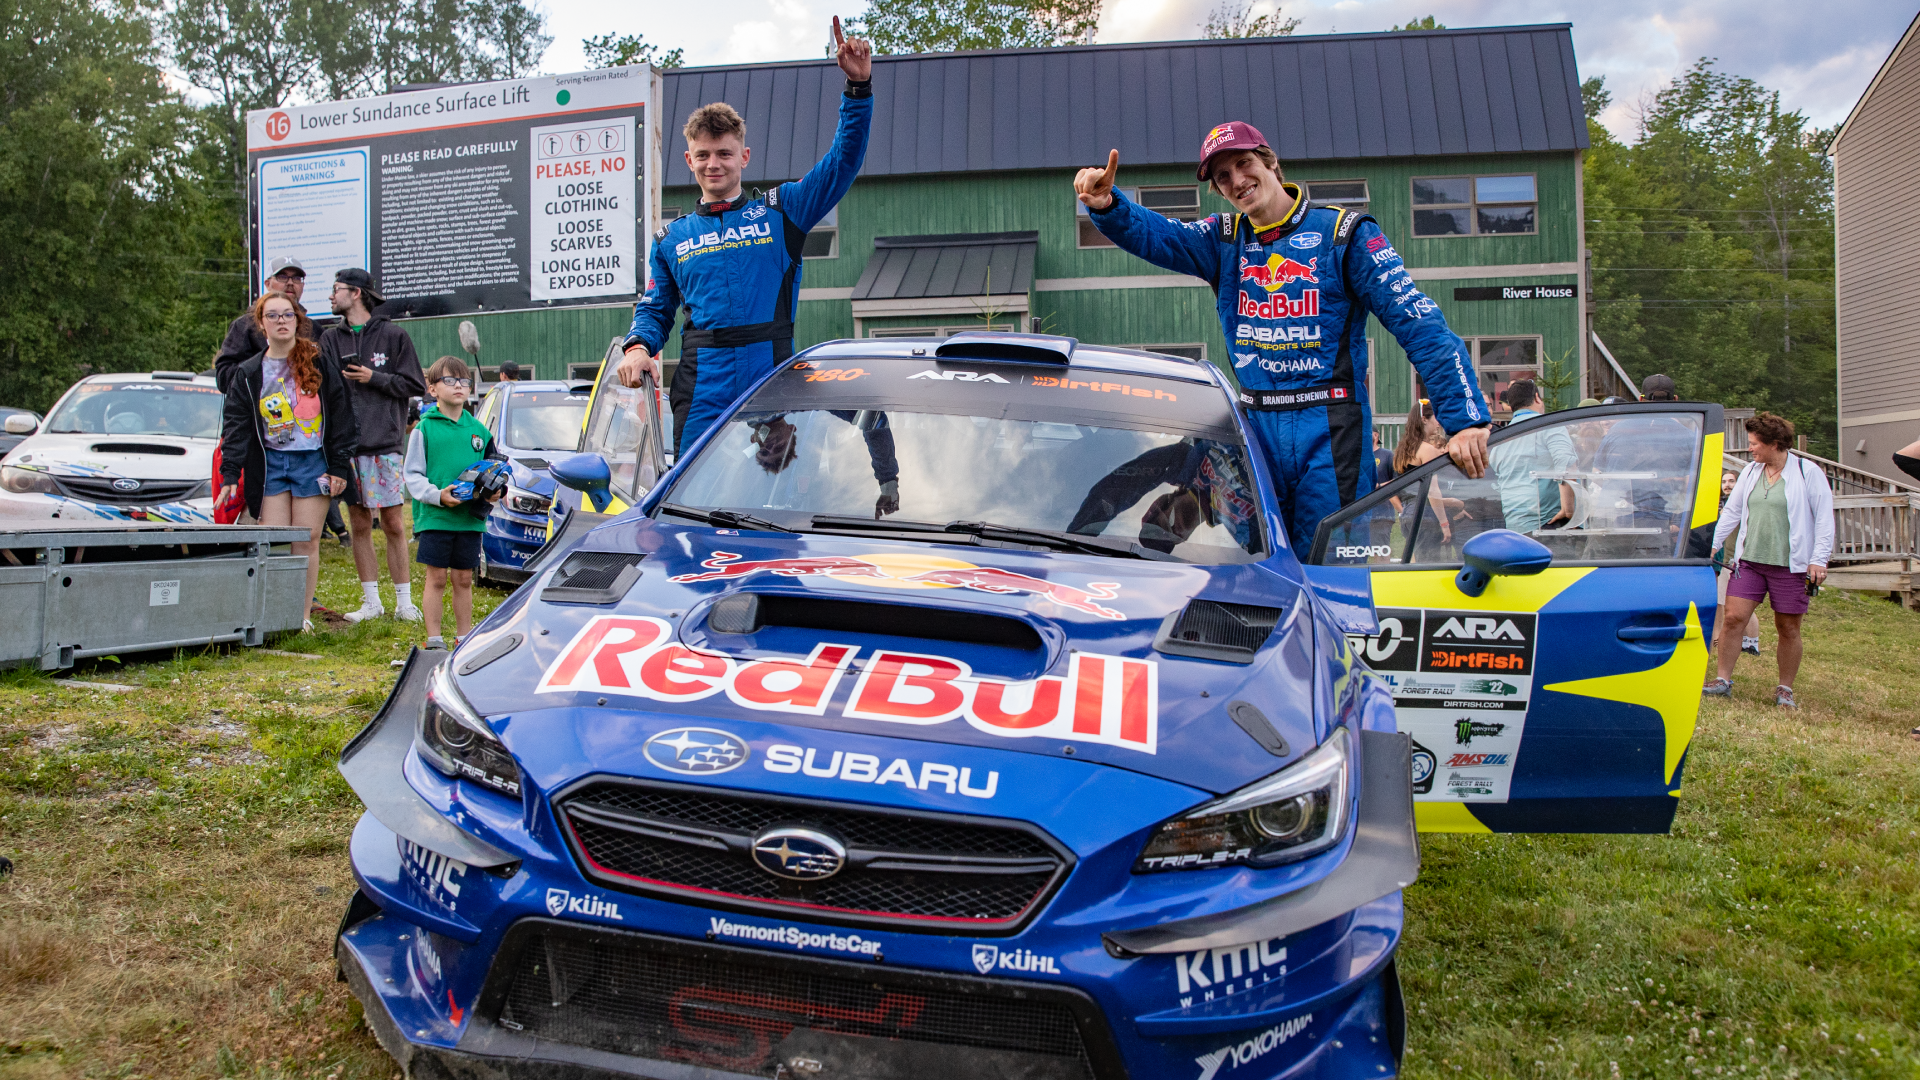 Subaru team posing with the racecar